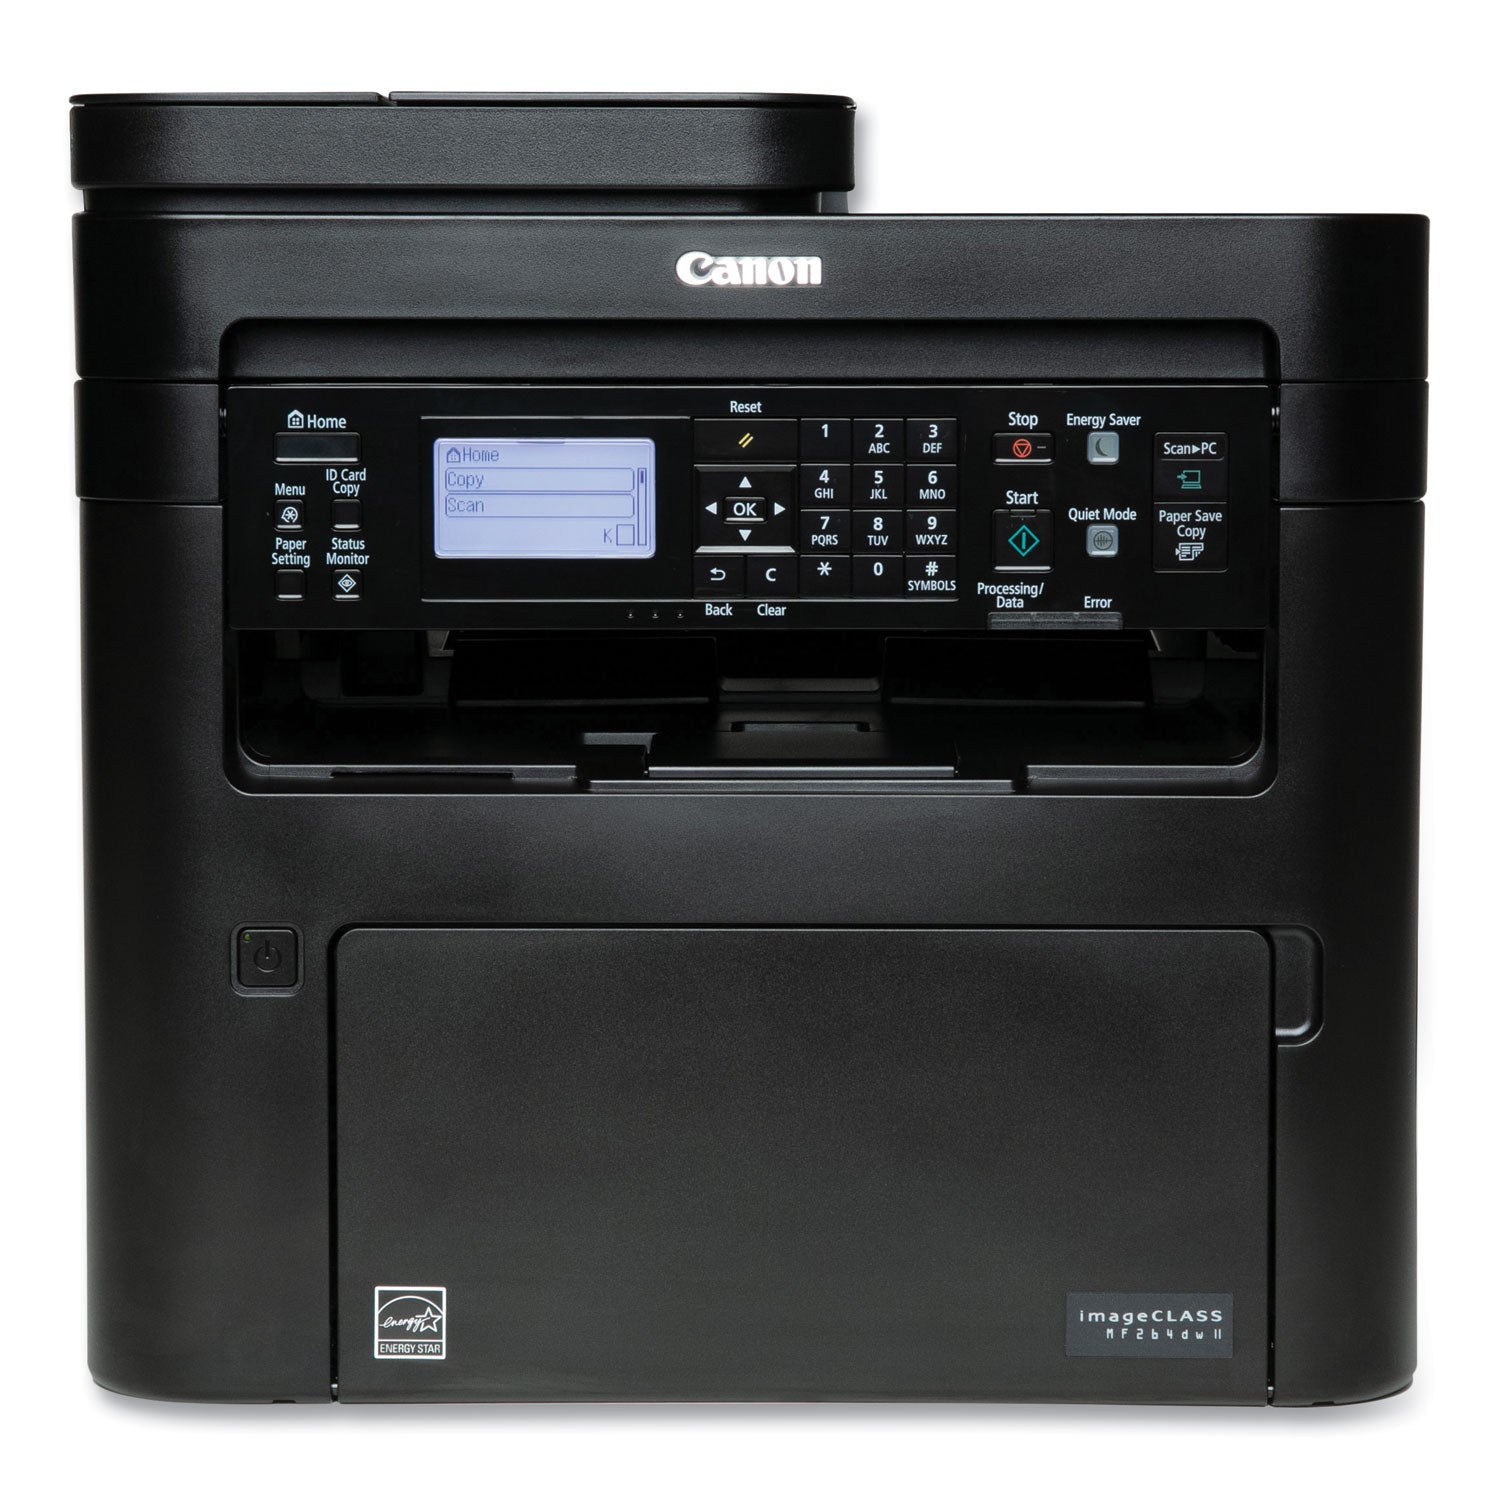 imageclass-mf264dw-ii-multifunction-laser-printer-copy-print-scan_cnm5938c020 - 1